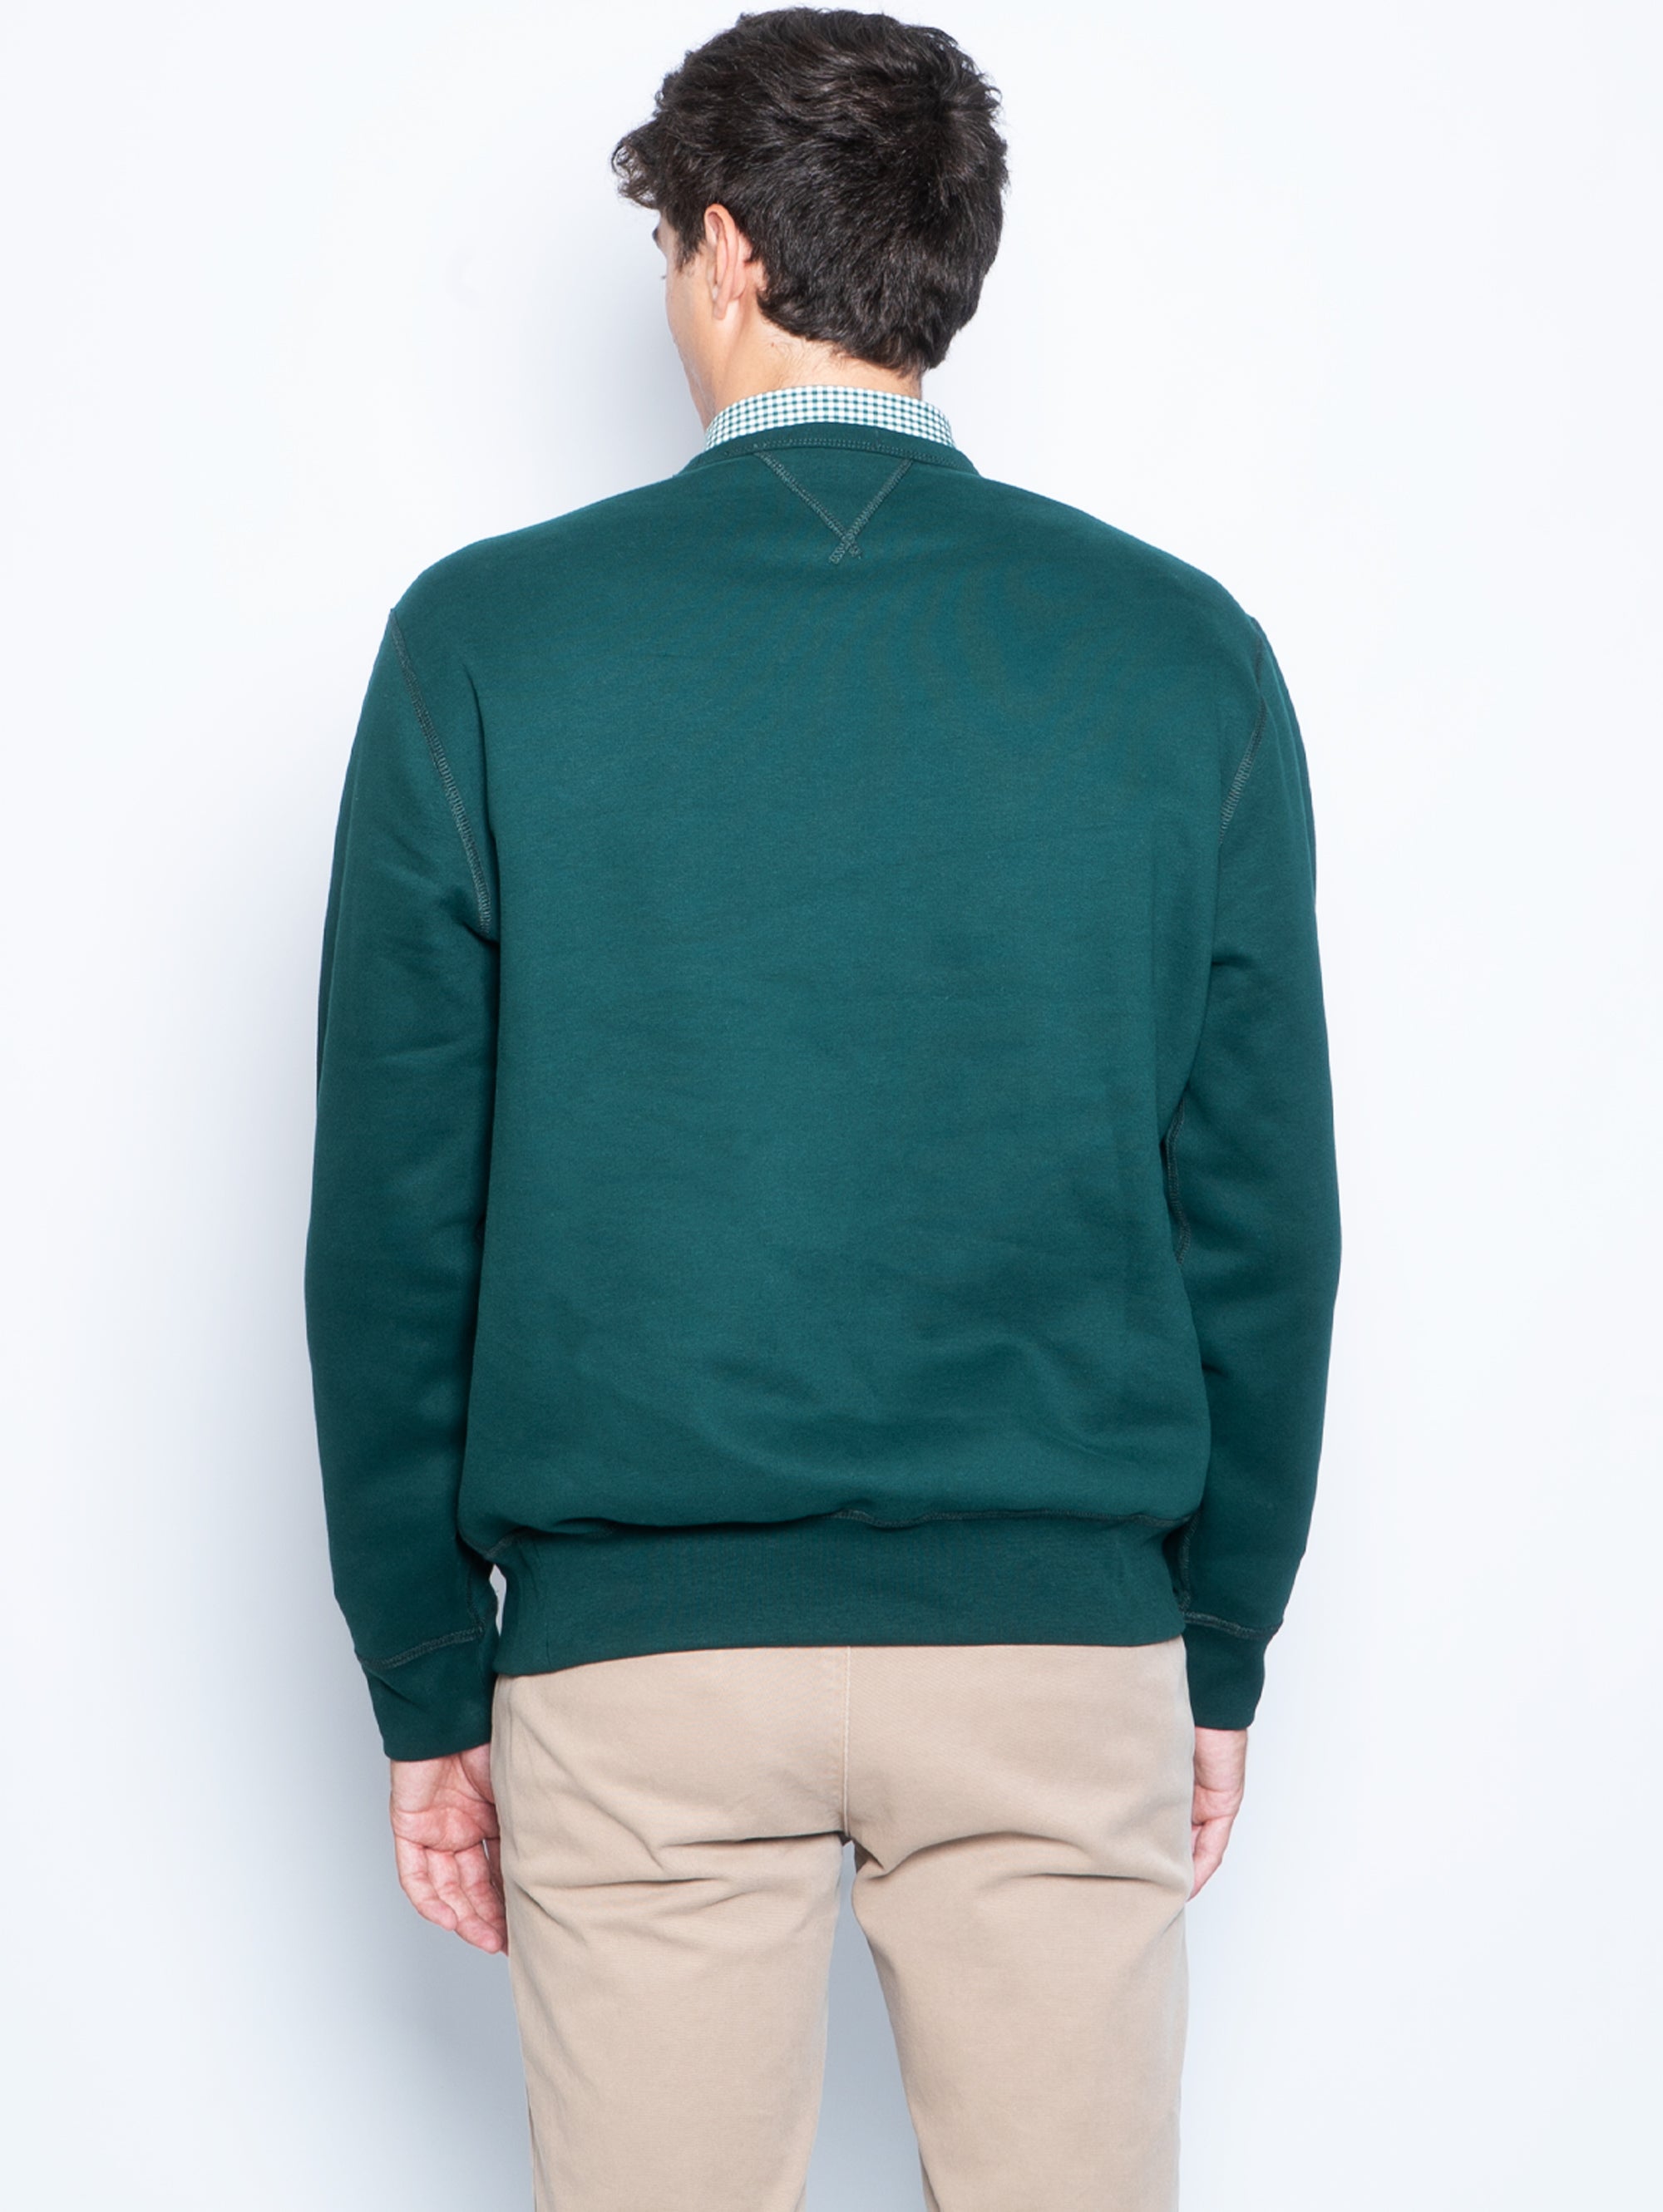 Crewneck Sweatshirt with Green V-Insert